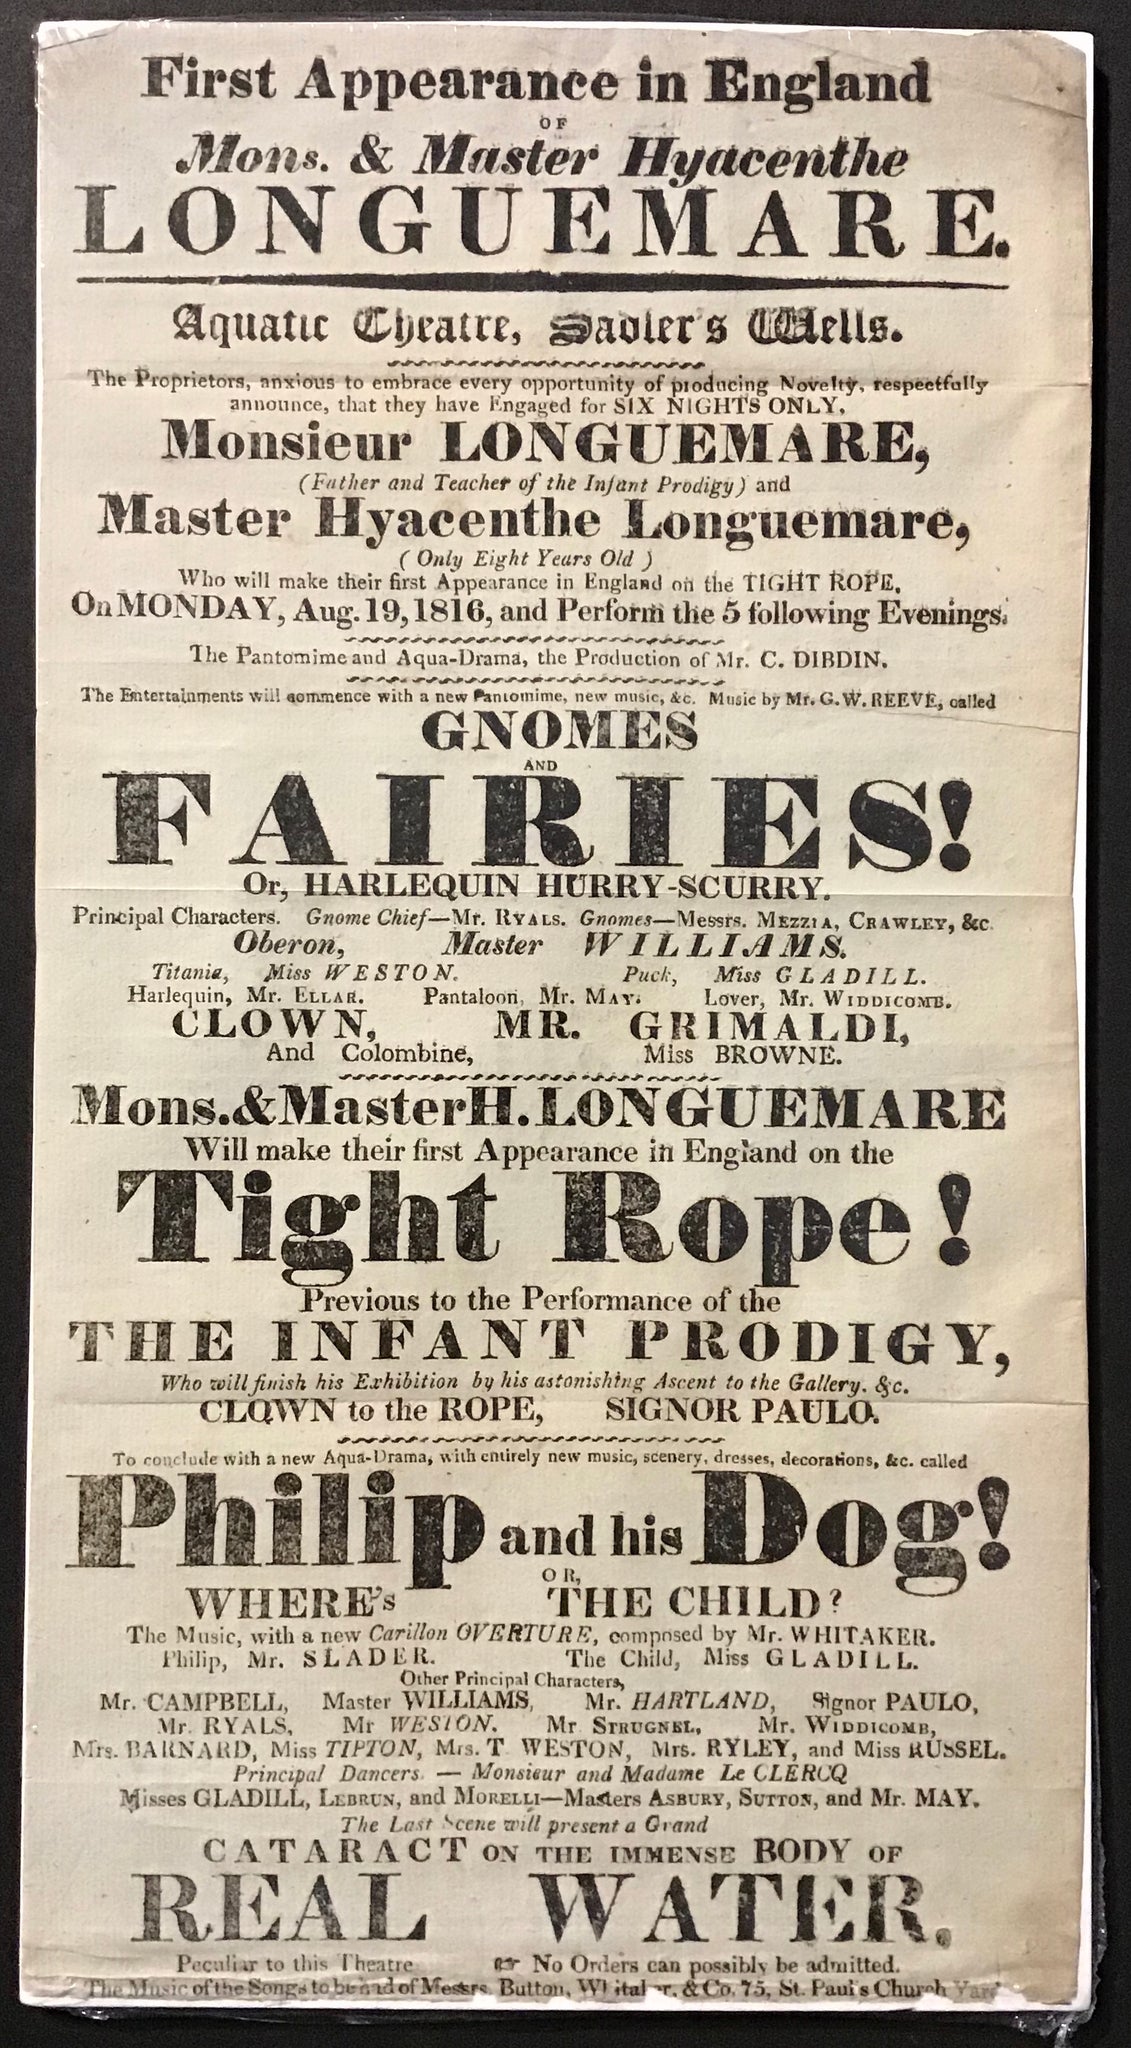 Monsieur & Master Hyacenthe Longuemare - Aquatic Theatre, Sadler's Wells - Playbill  August 19,1816(Joseph Grimaldi)